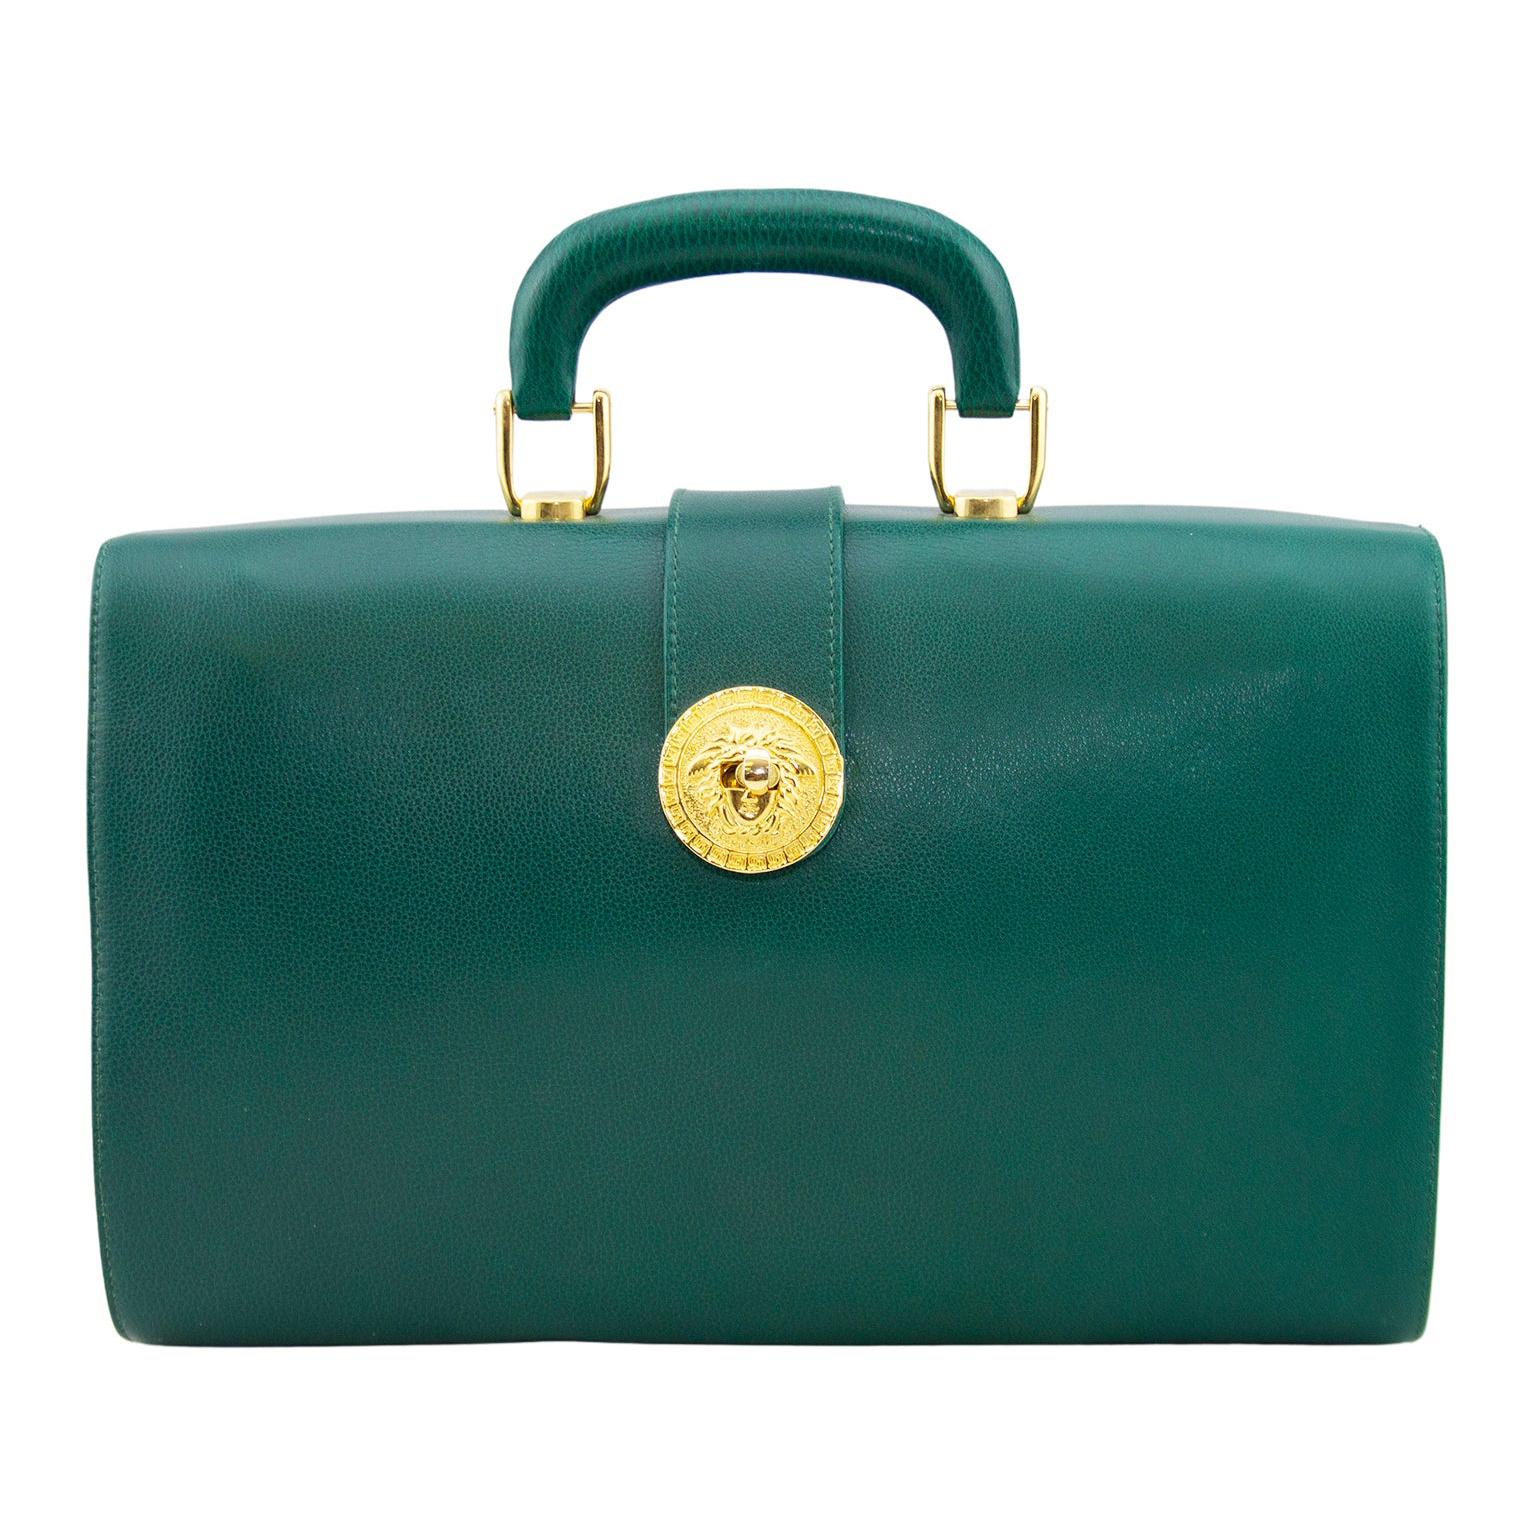 1990s Gianni Versace Dark Green Leather Travel Bag